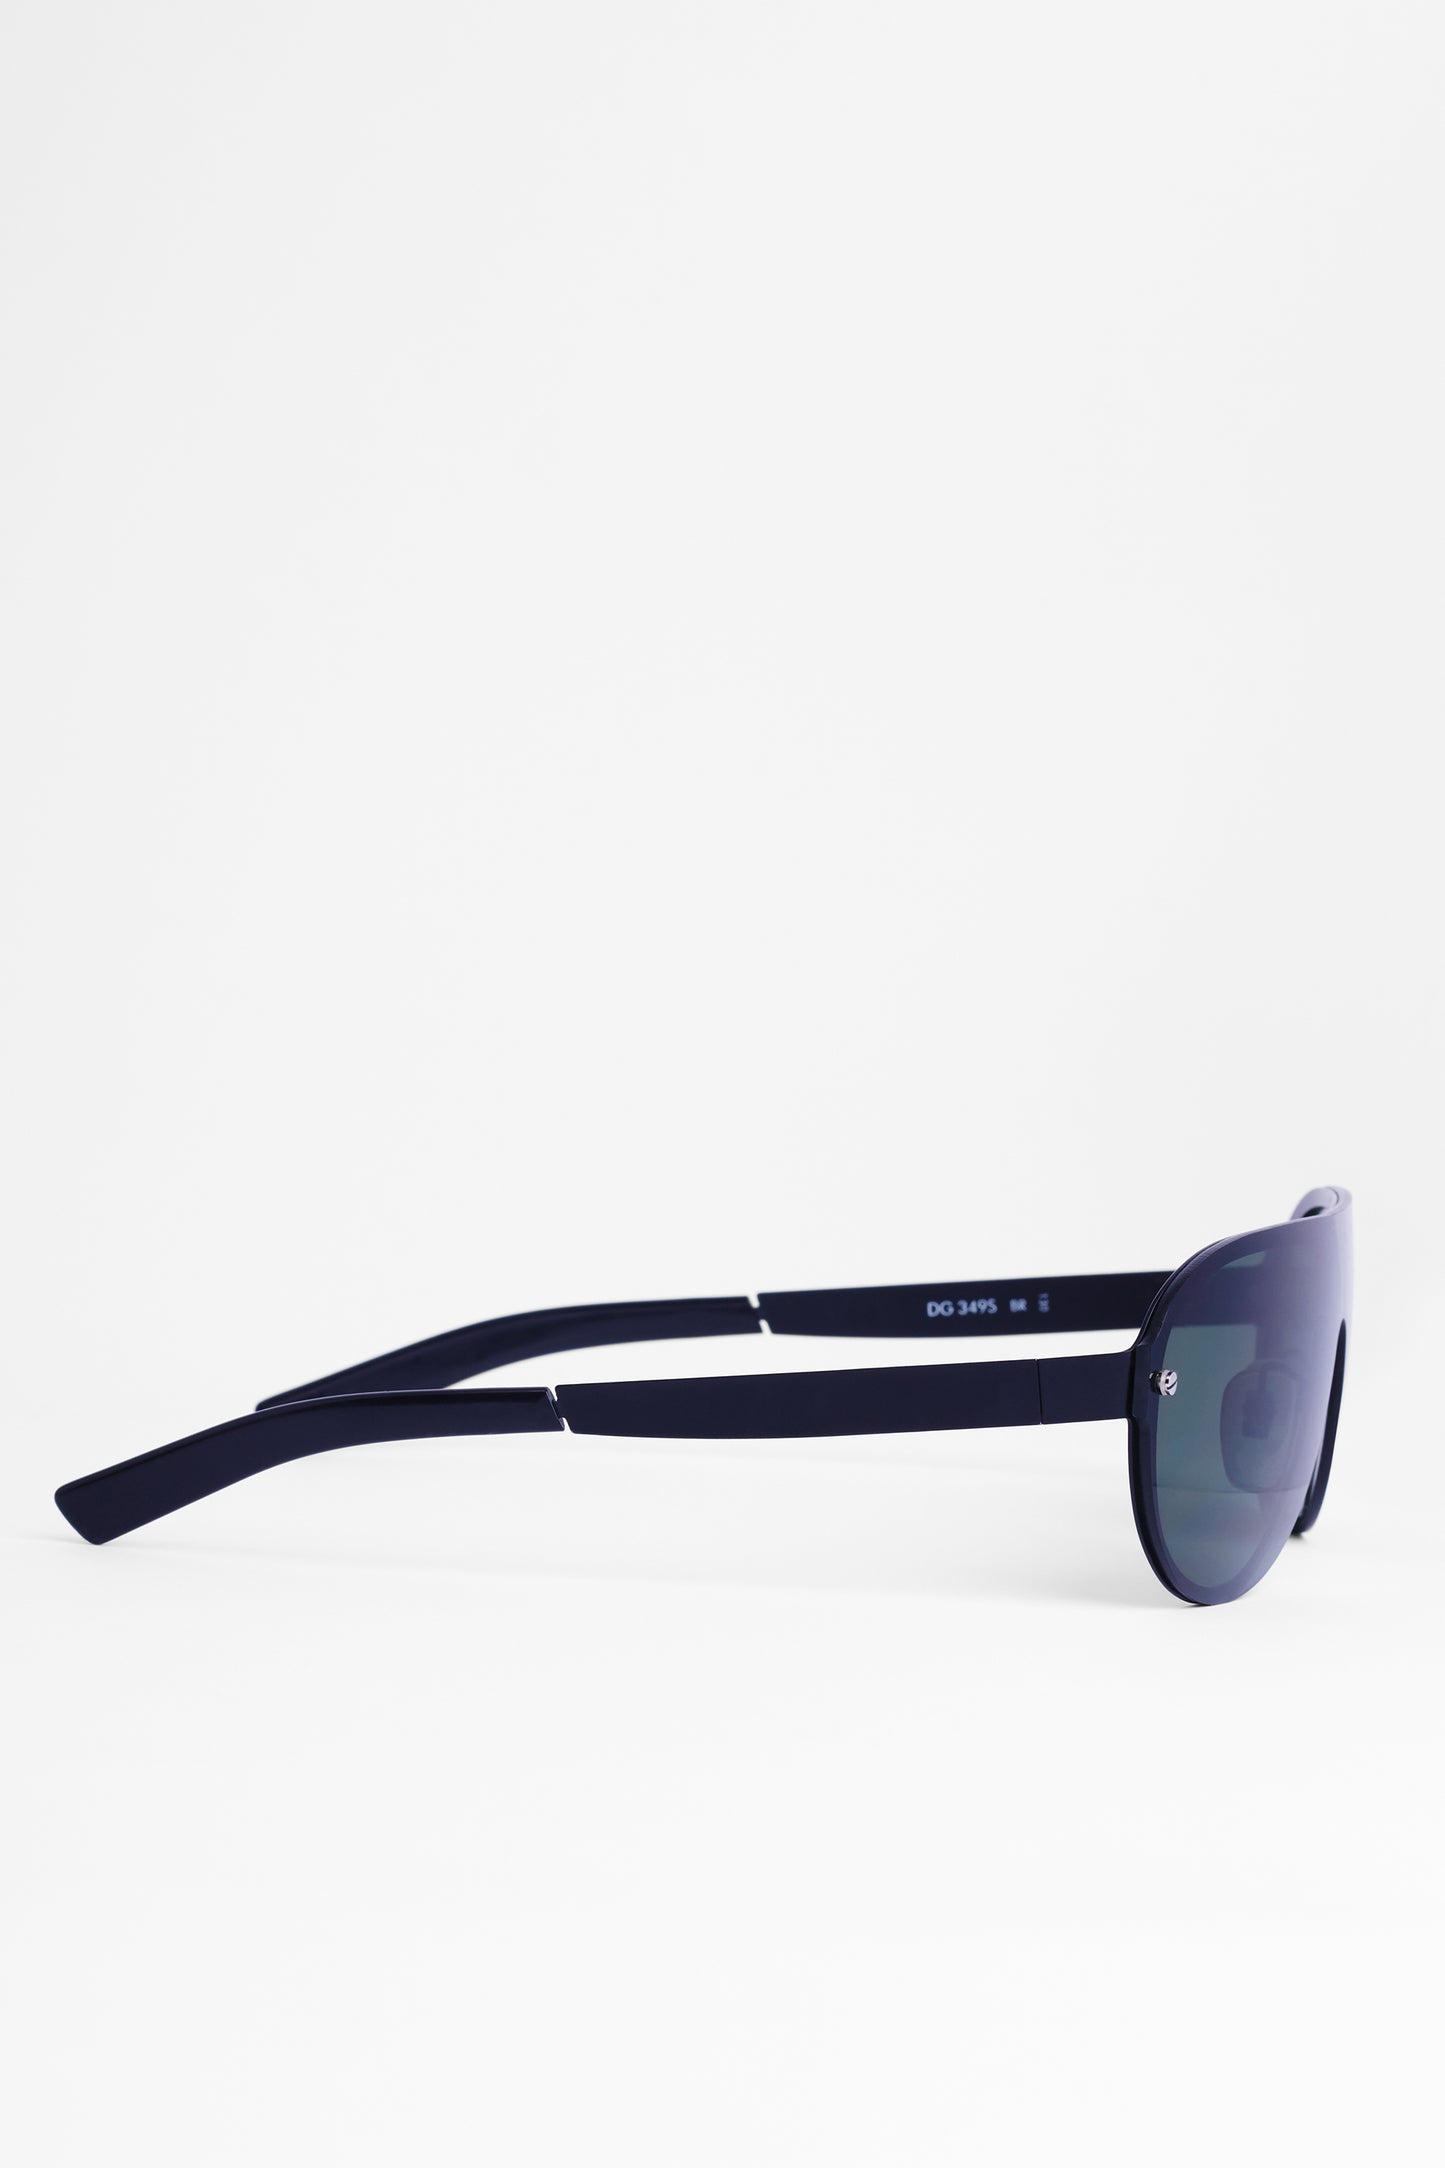 Vintage 2000 Slim Black Aviator Sunglasses